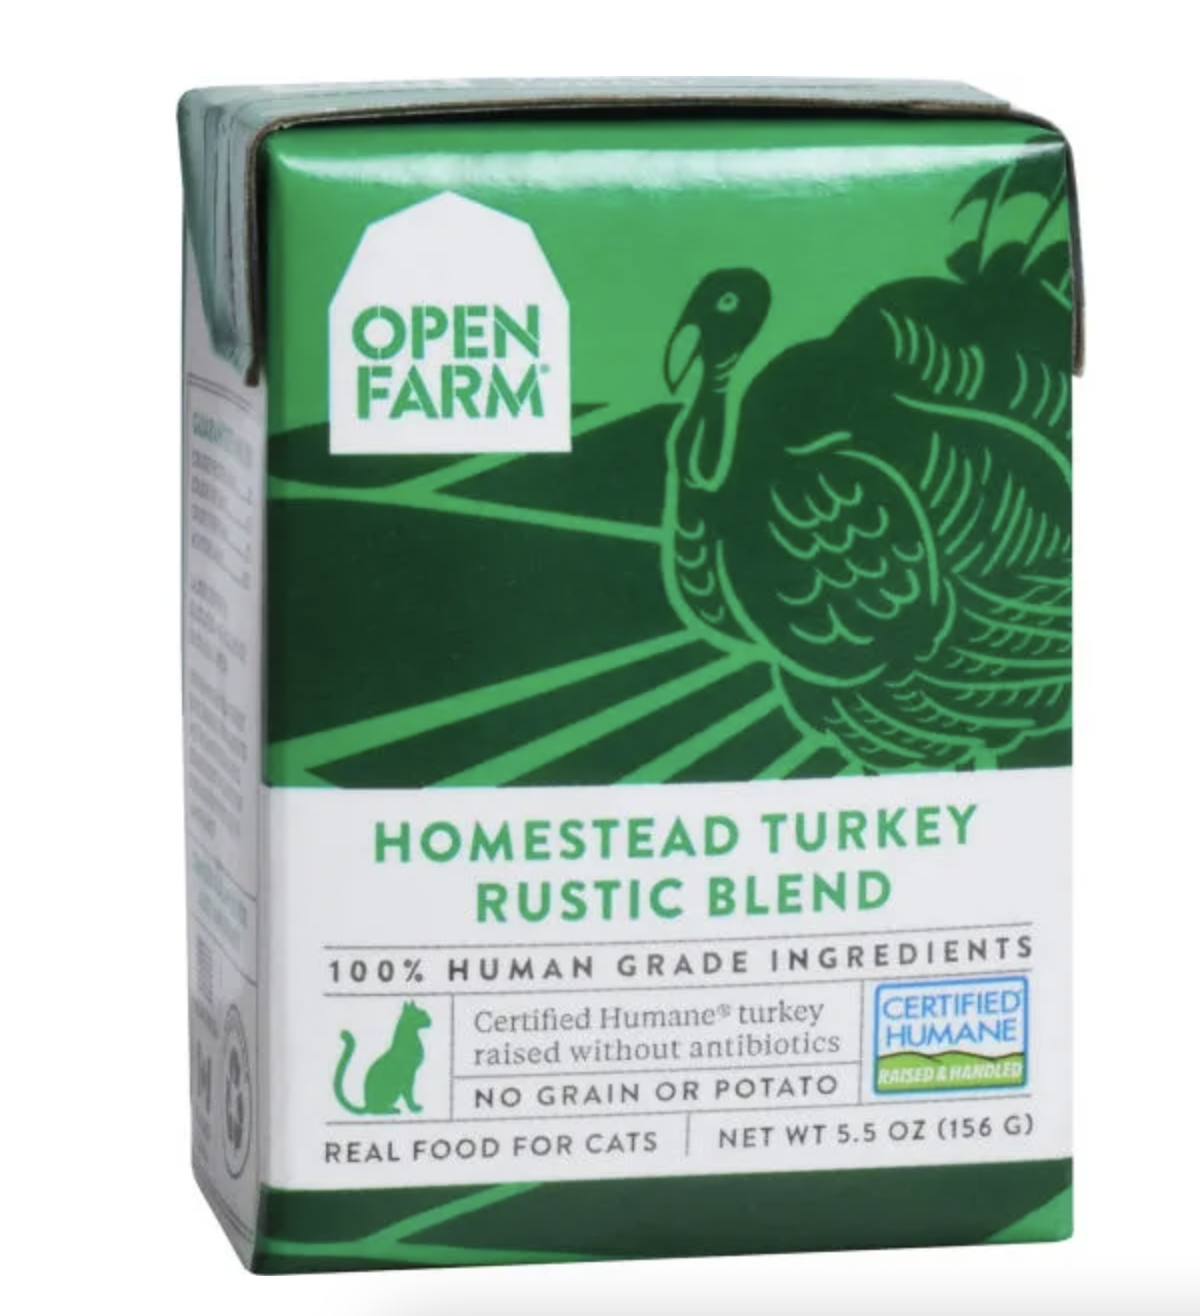 Homestead Turkey Rustic Blend Cat Food - Open Farm